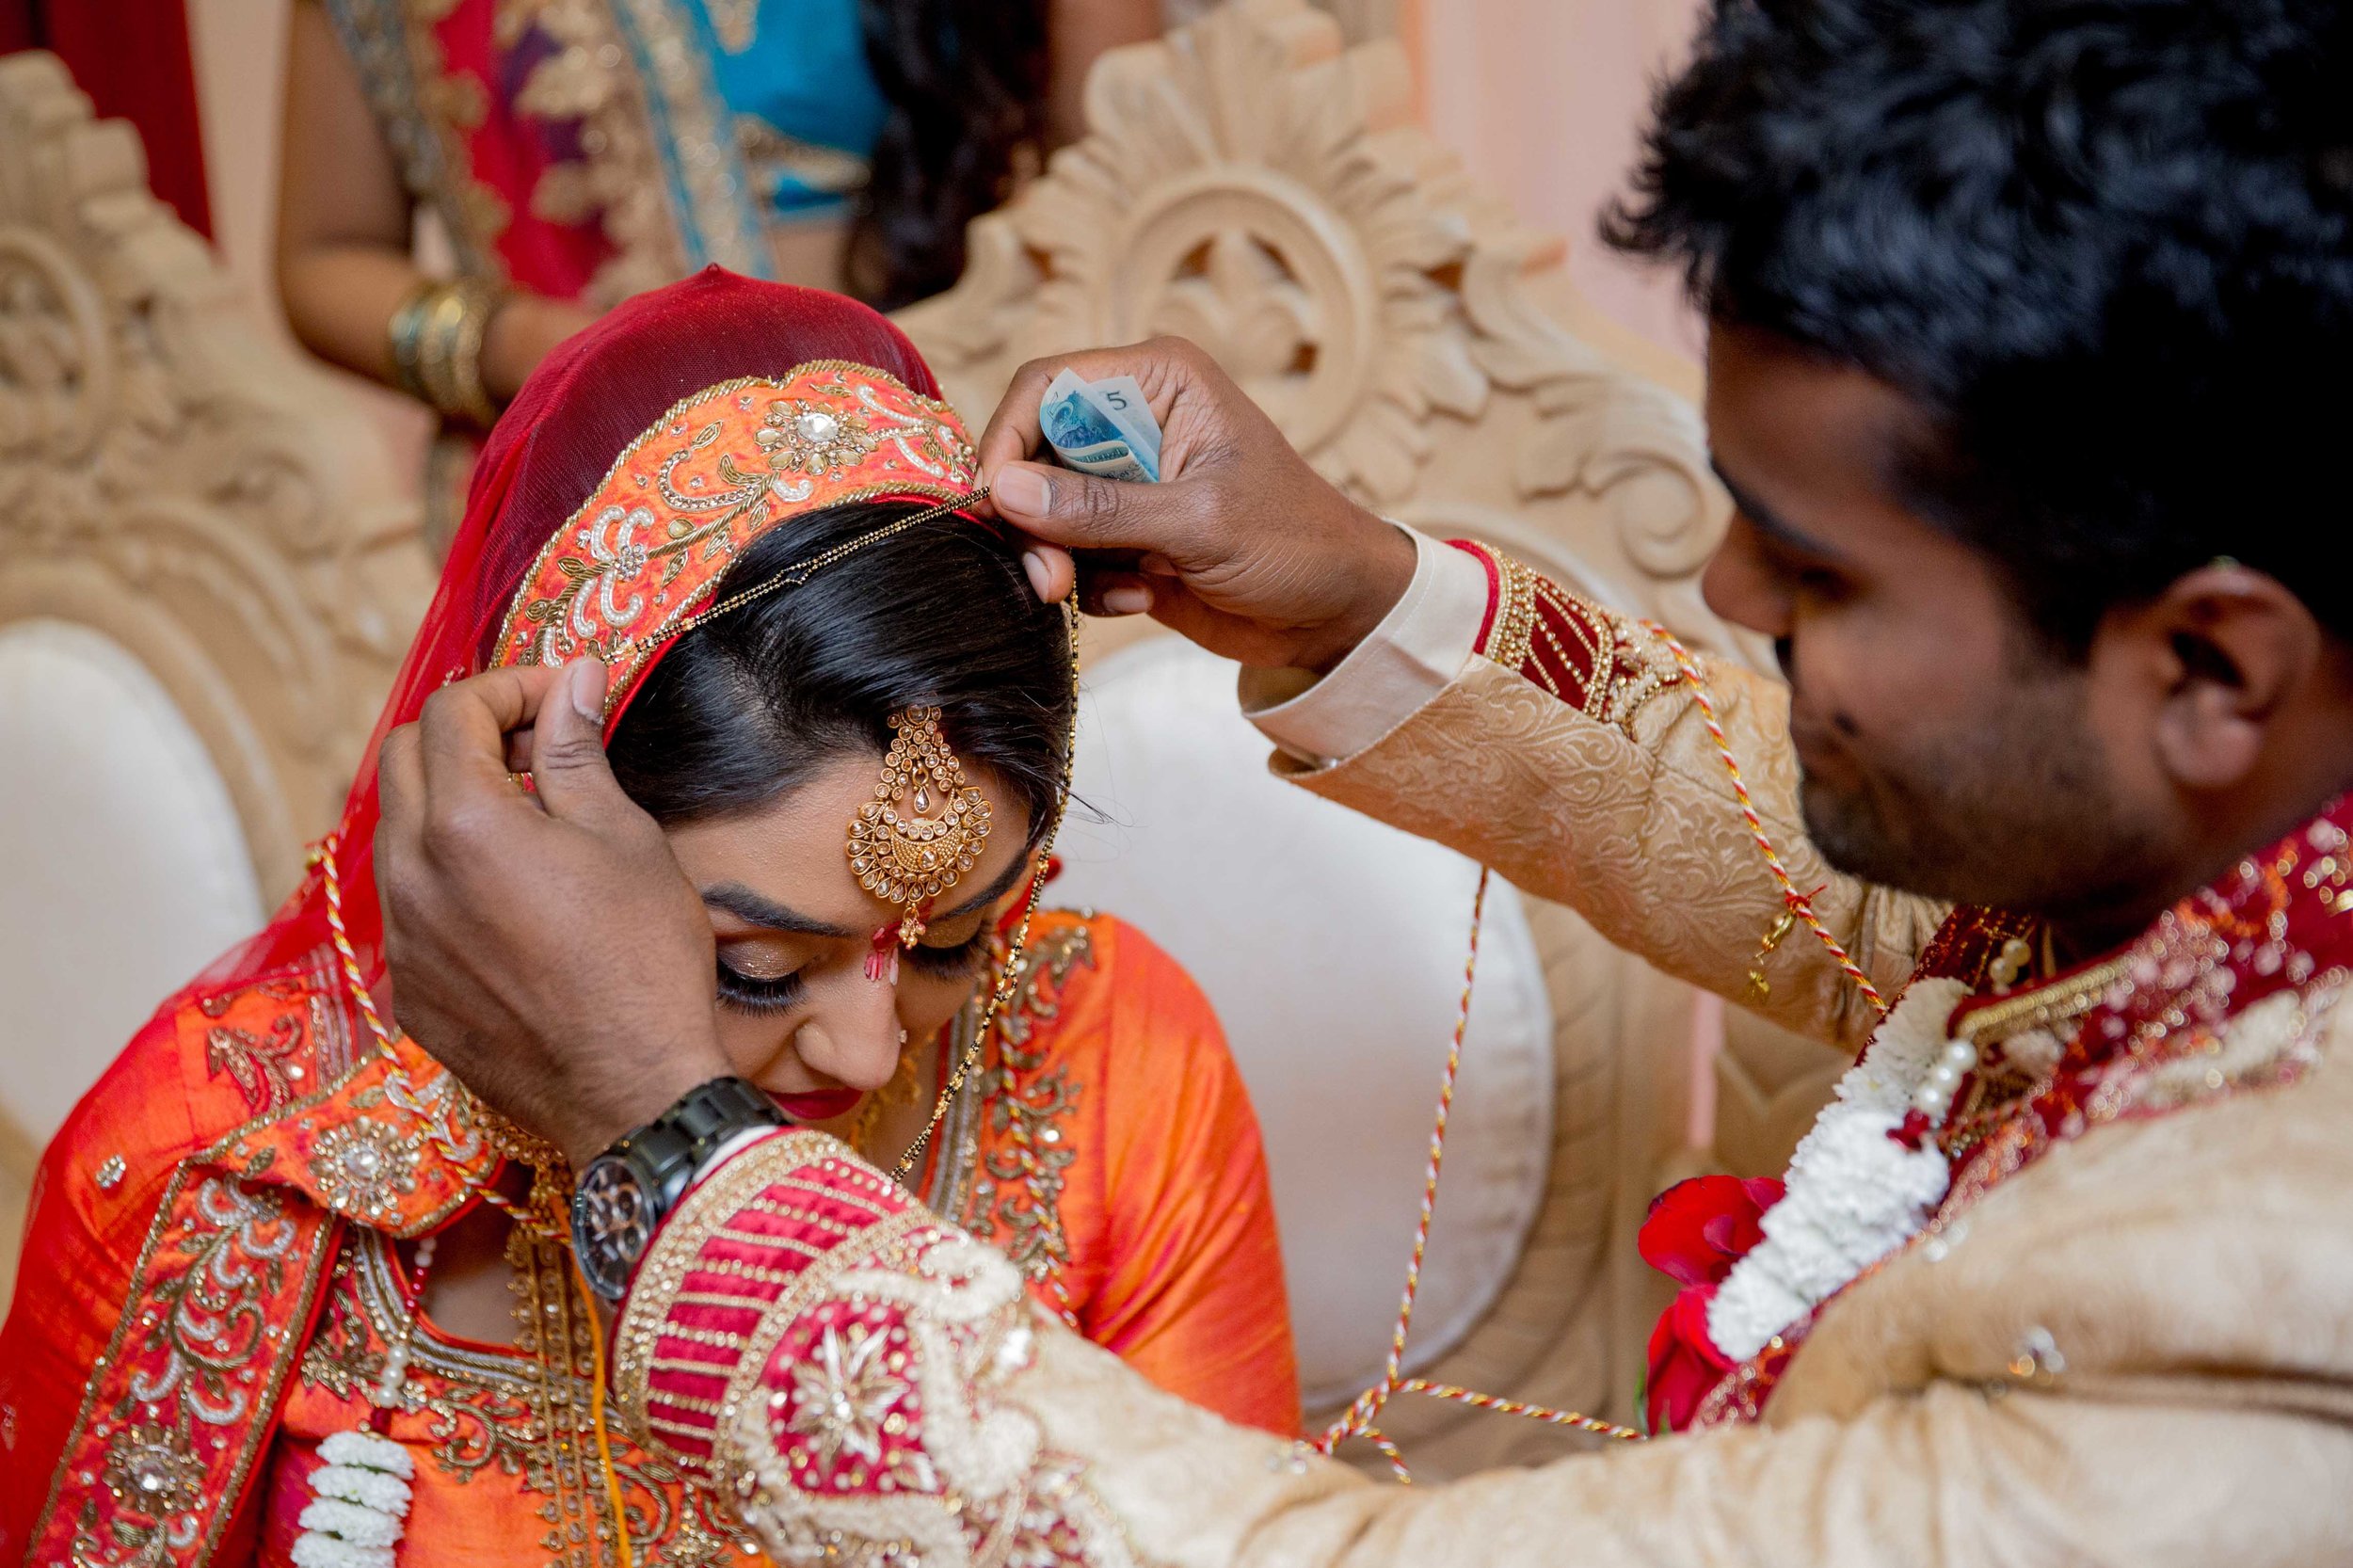 premier-banquetting-london-Hindu-asian-wedding-photographer-natalia-smith-photography-39.jpg